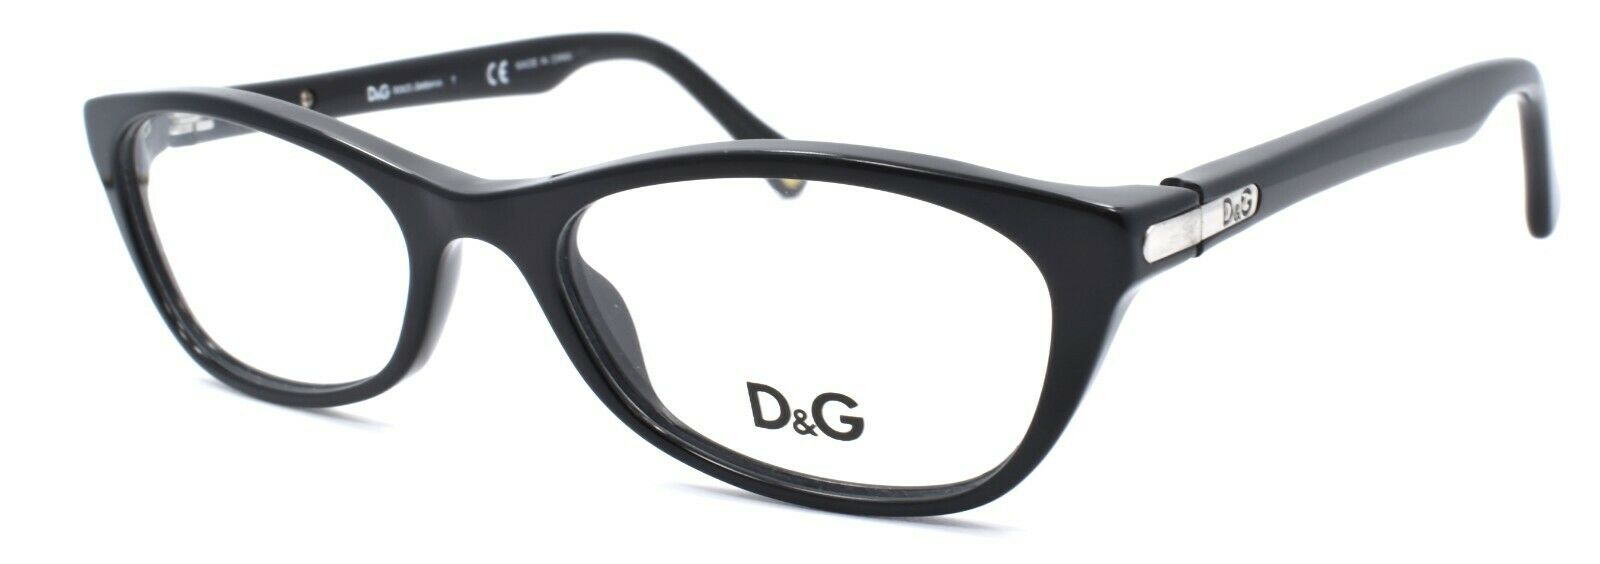 1-Dolce & Gabbana D&G 1218 501 Women's Eyeglasses Frames 49-17-135 Black-679420421582-IKSpecs